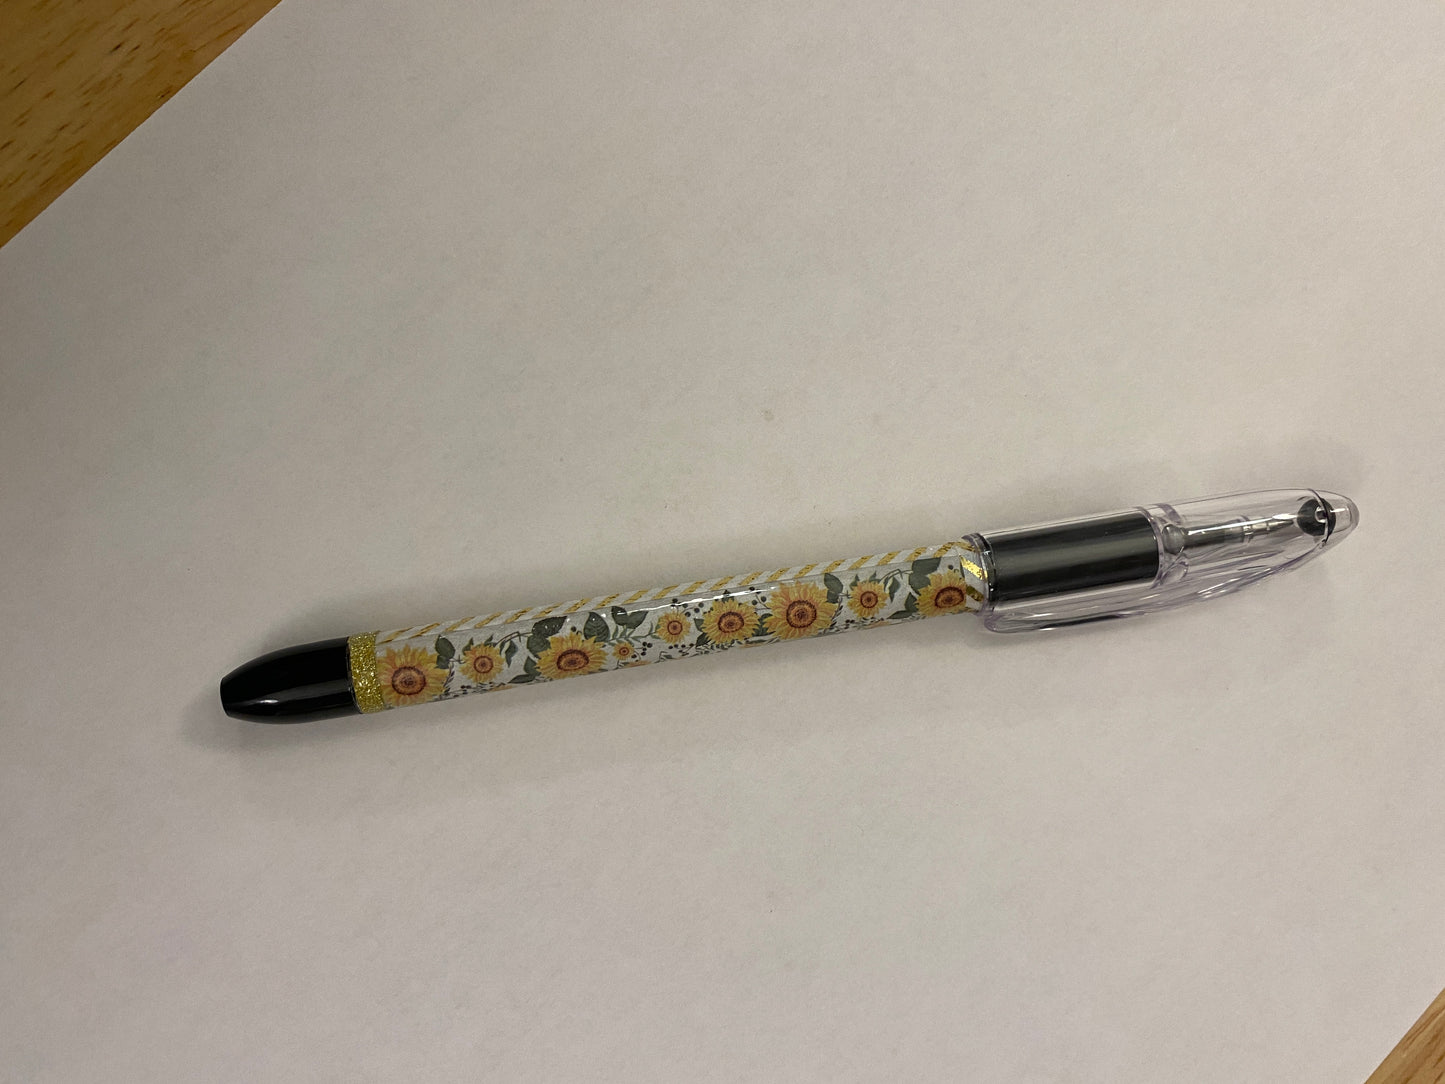 Cute Sunflowers with Glitter Pen, Sunflower design pen, Sunflowers design pental rsvp pen